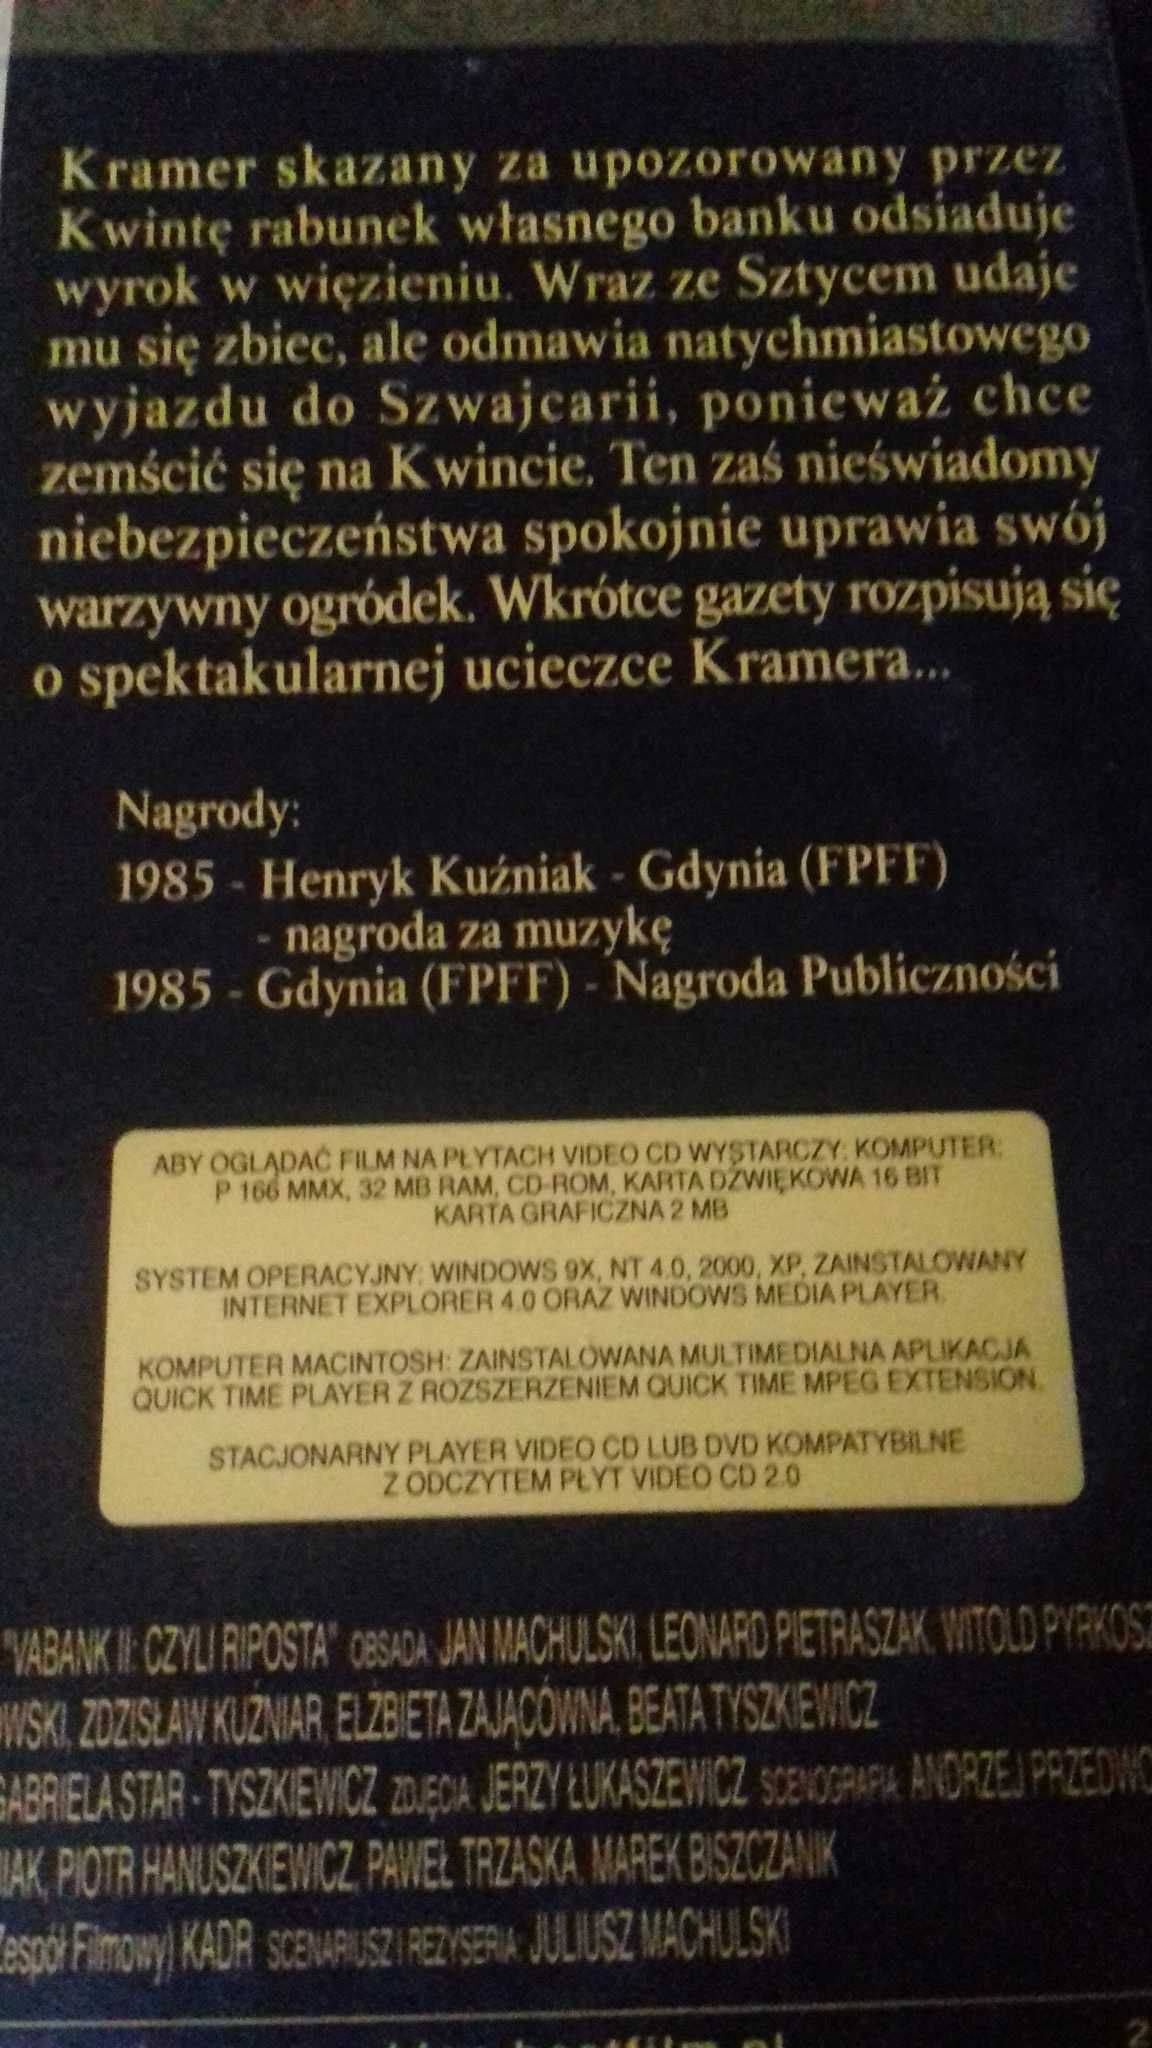 "Vabank II, czyli riposta" płyta video cd